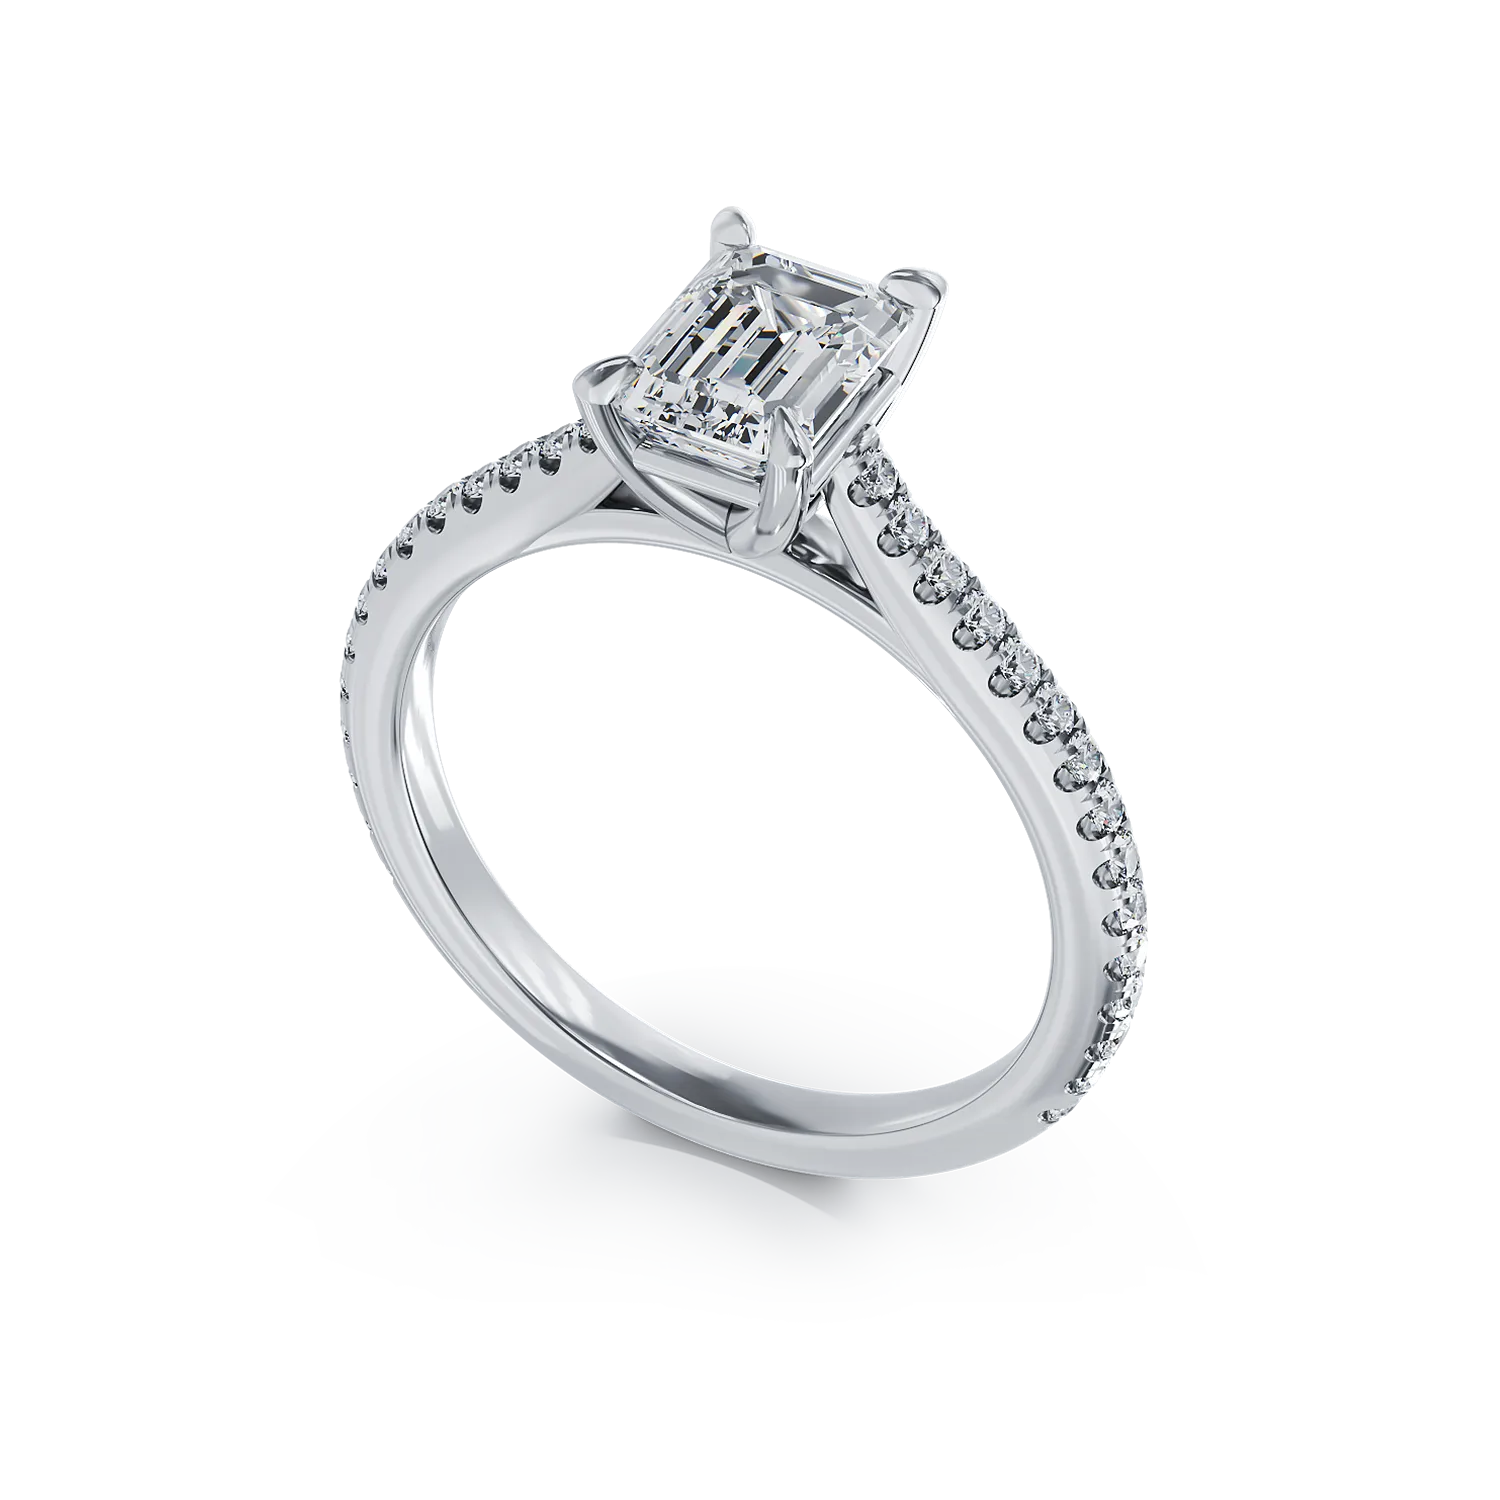 Diamond platinum engagement ring with 1ct diamond and 0.226ct diamonds